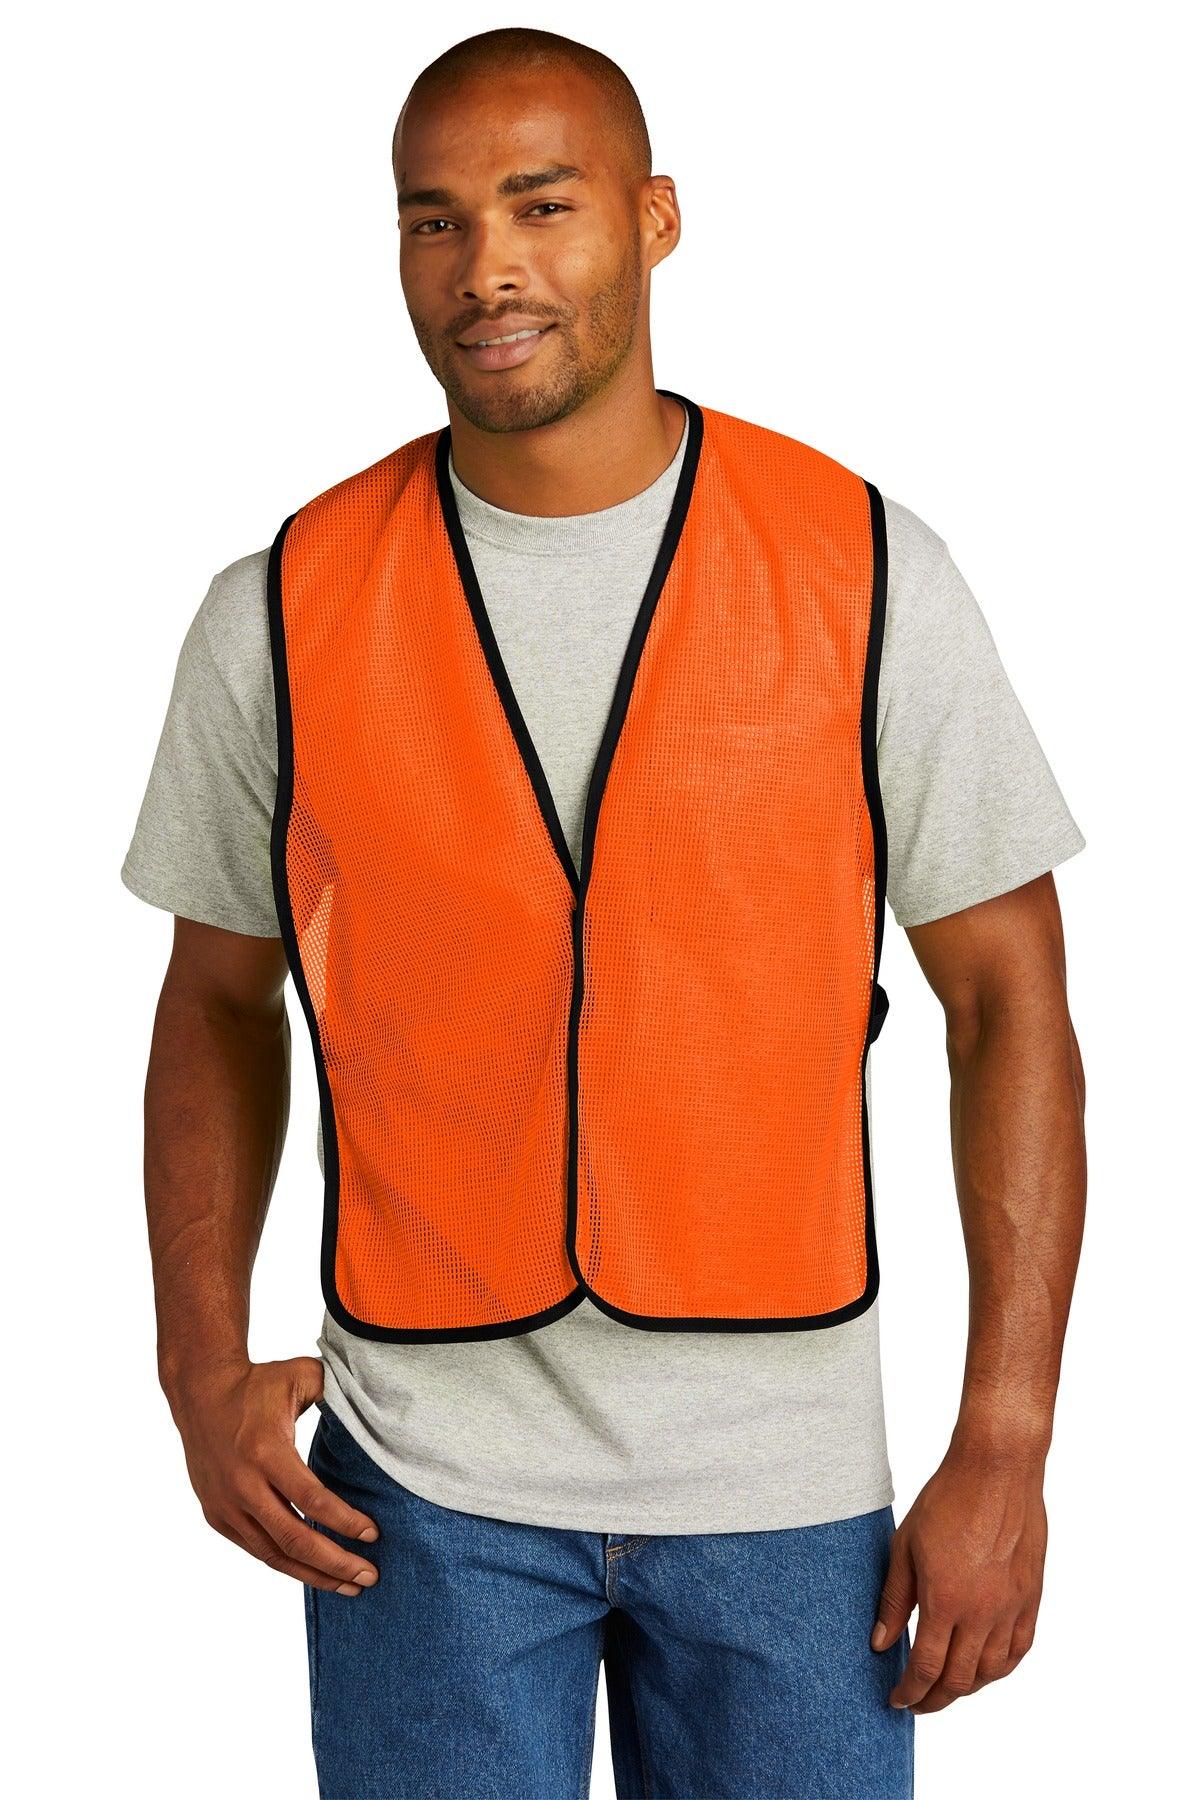 CornerStone Enhanced Visibility Mesh Vest. CSV01 - Dresses Max